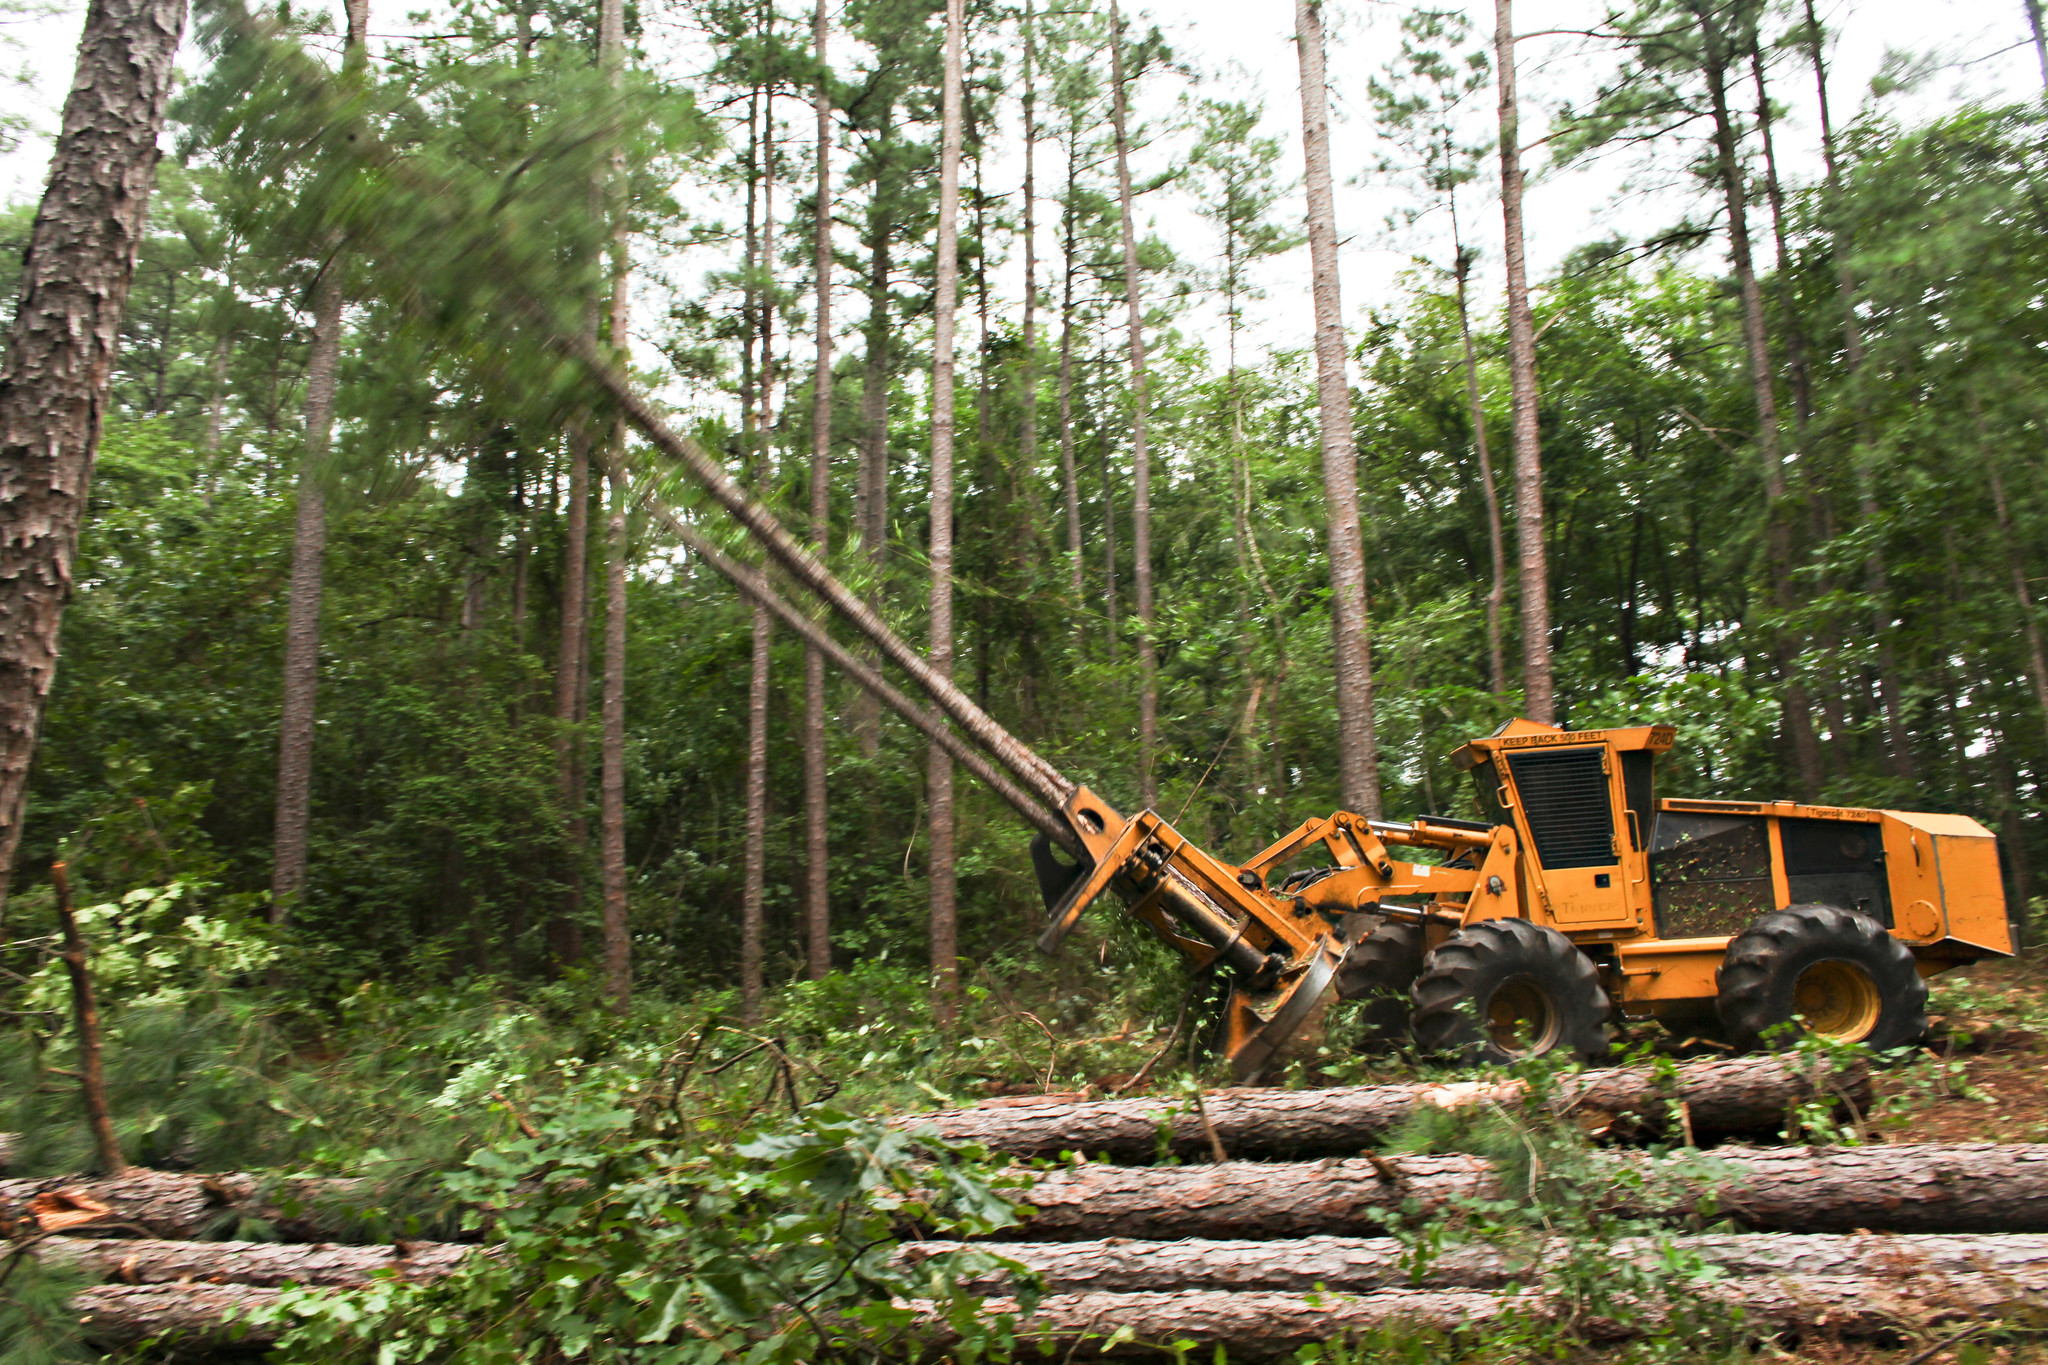 Feller buncher harvests pines in South Carolina